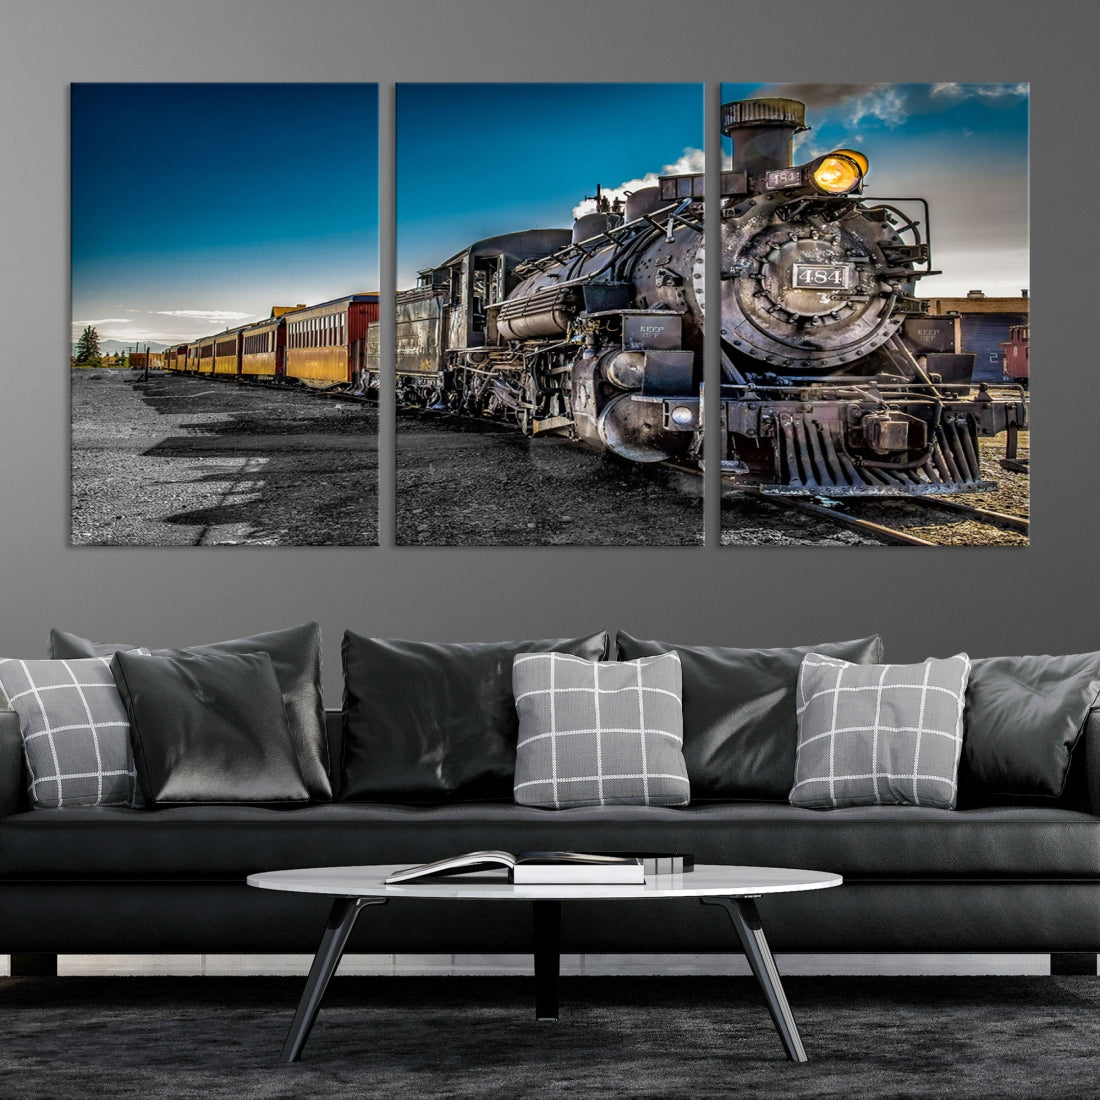 Nostalgic Steam Locomotive Train Wall Art Canvas Print for Living Room Office Decor